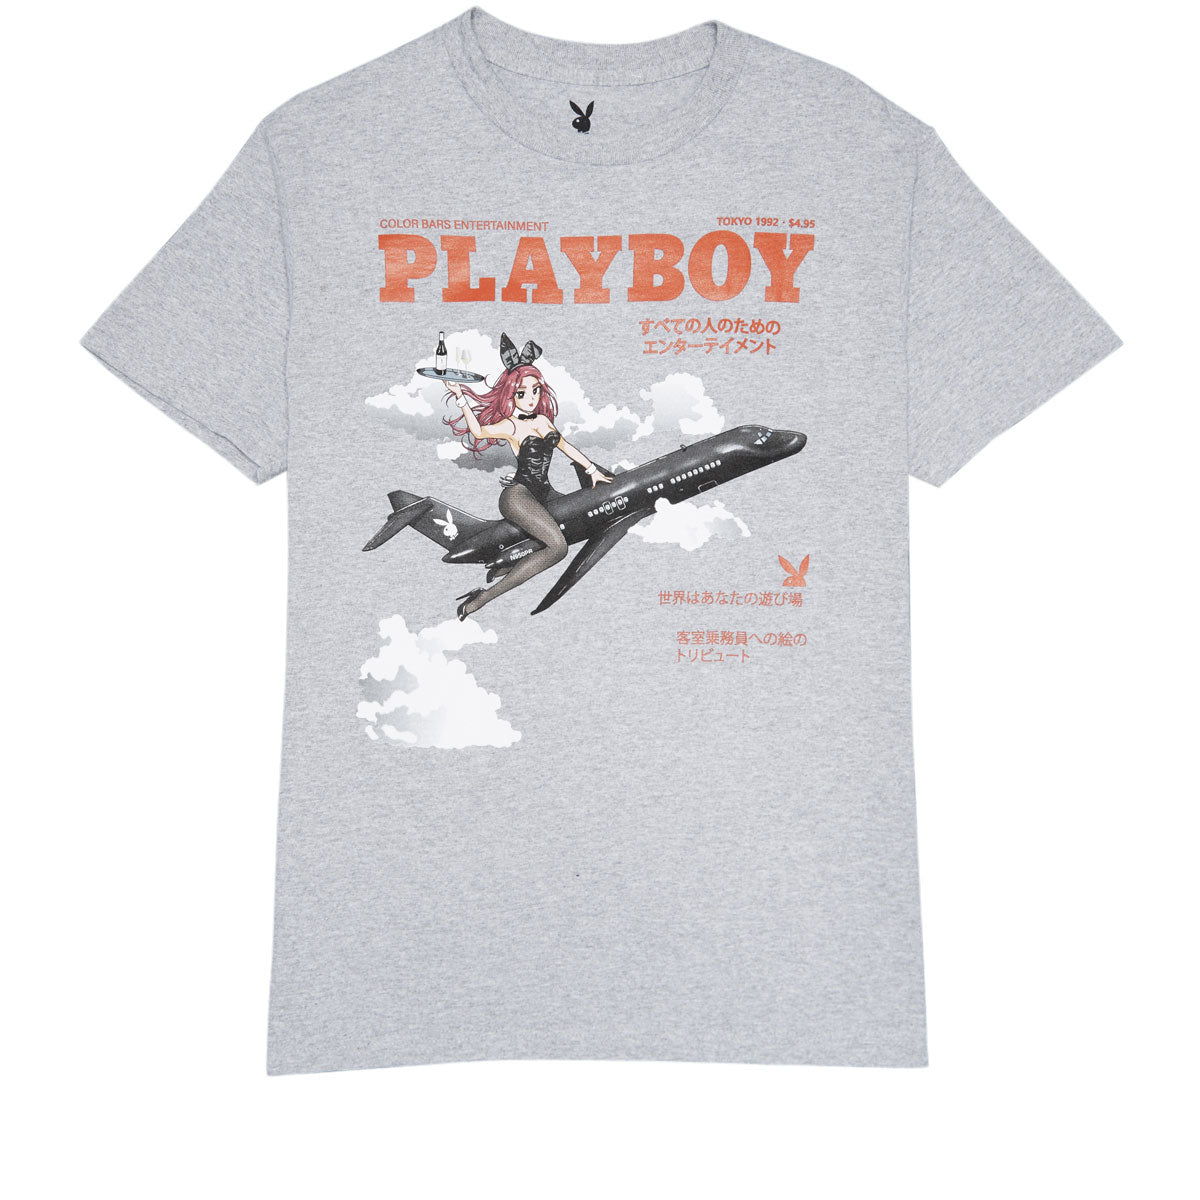 Color Bars x Playboy Tokyo Take Flight T-Shirt - Heather Grey image 1